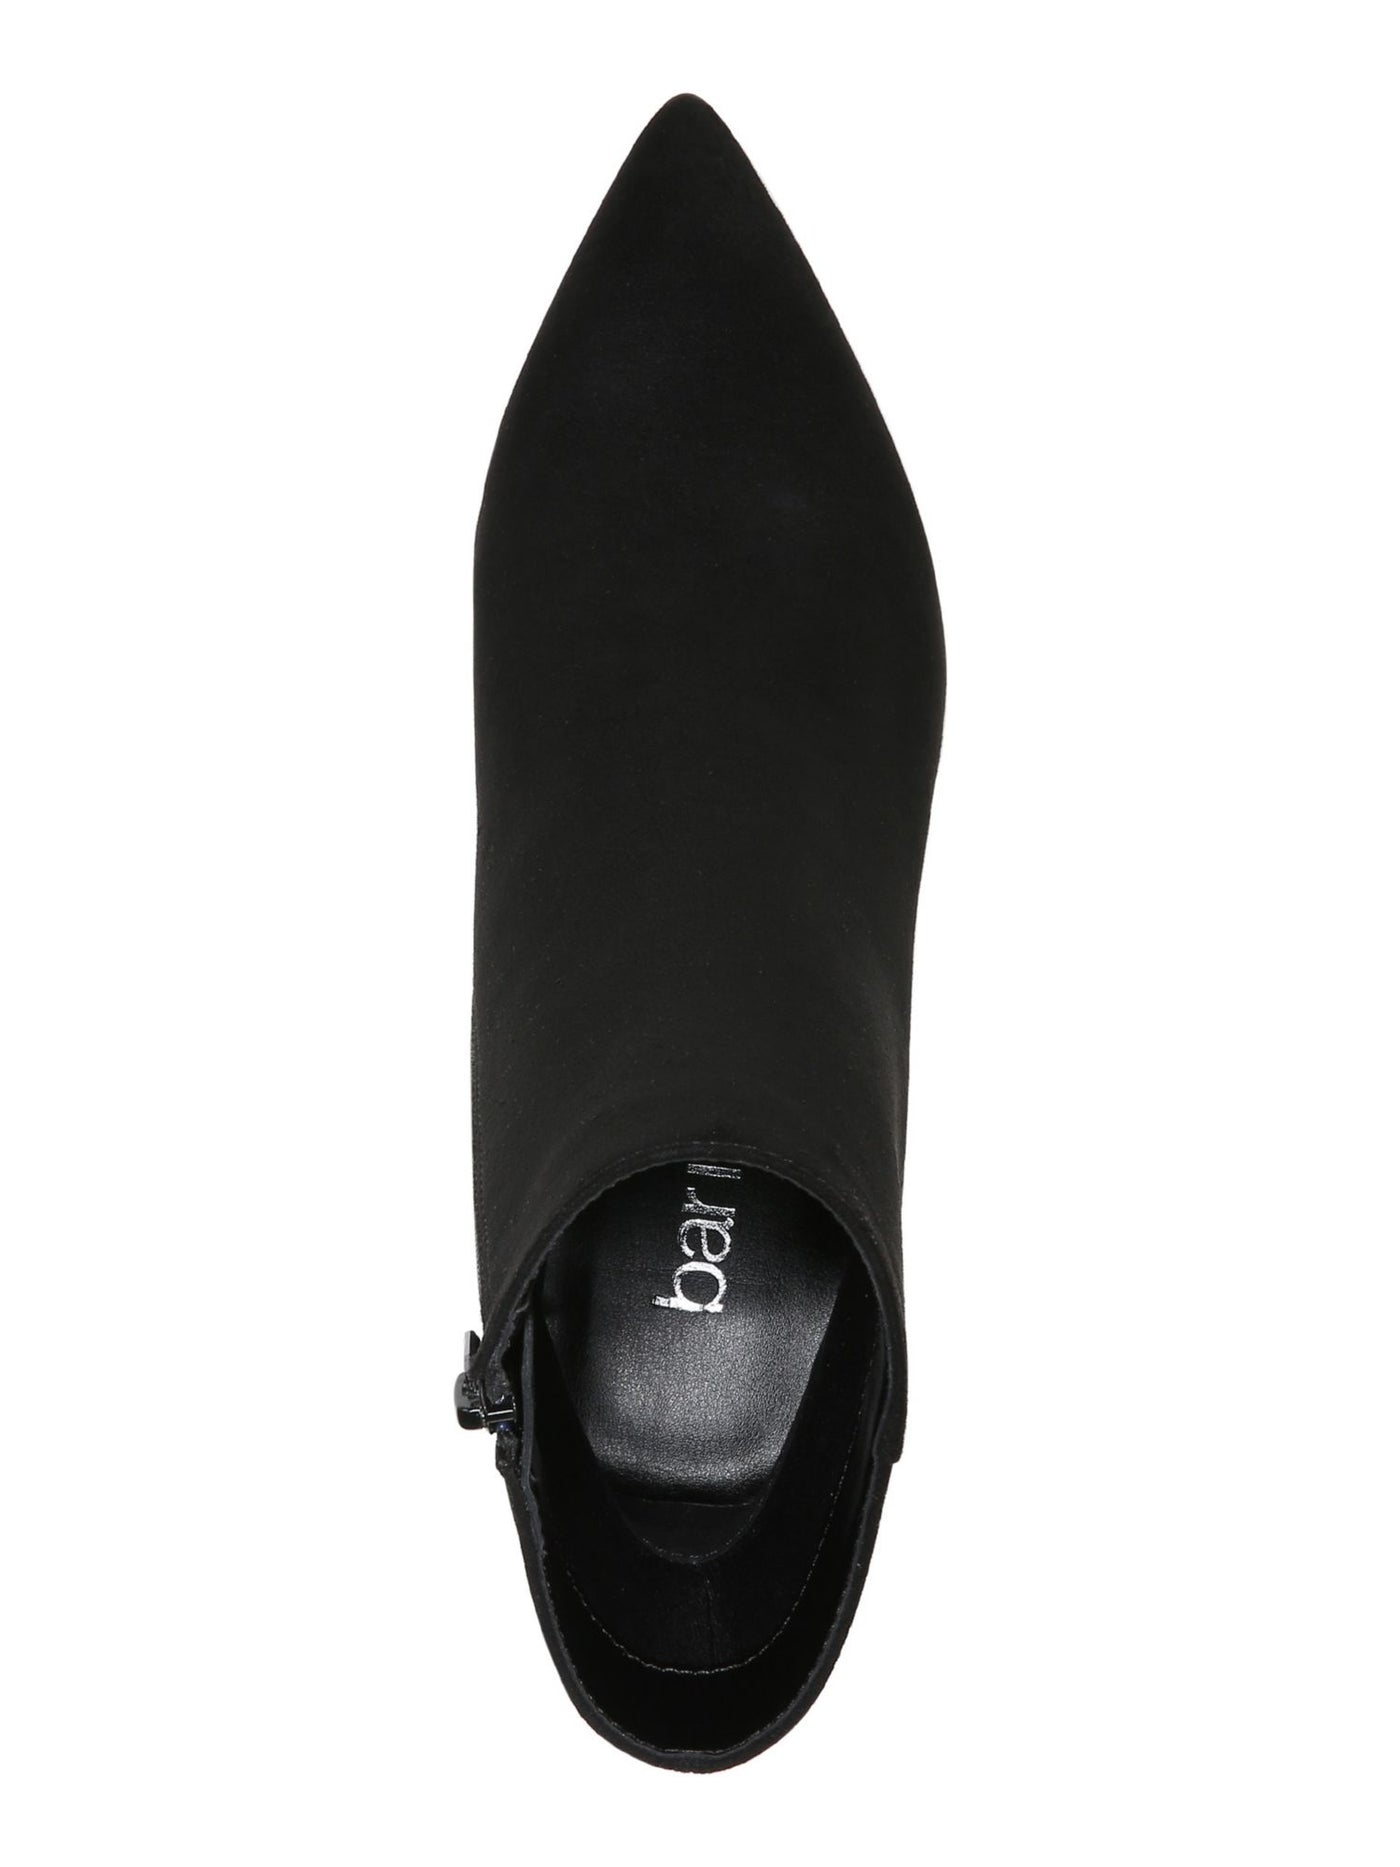 BAR III Womens Black Comfort Asya Pointed Toe Sculpted Heel Zip-Up Heeled Boots 10 M